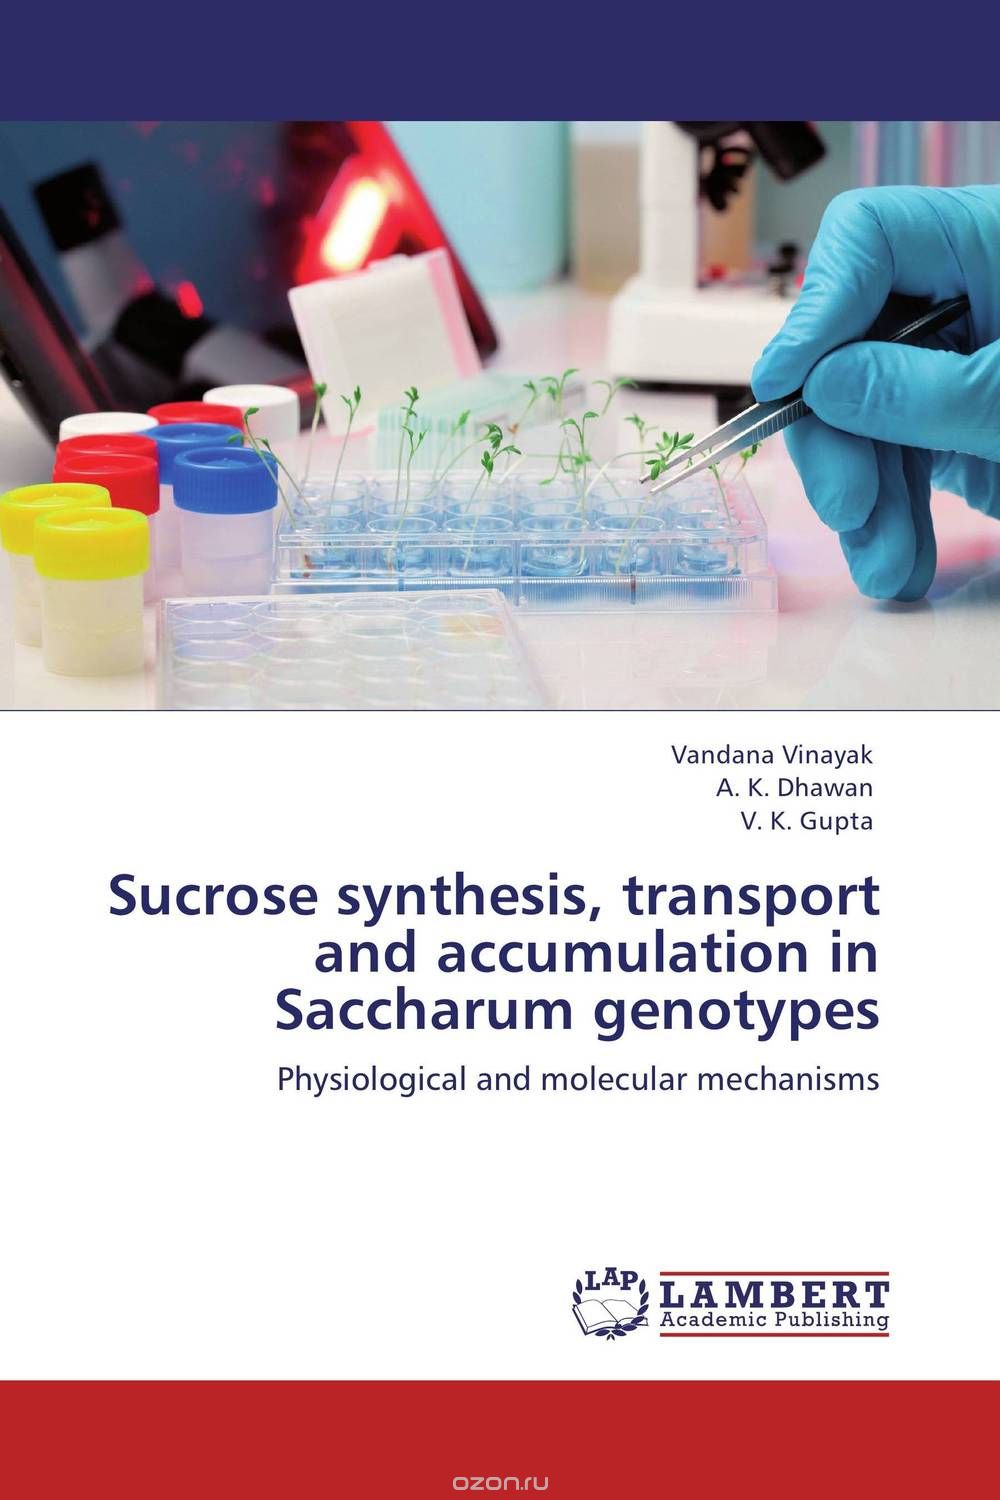 Скачать книгу "Sucrose synthesis, transport and accumulation in Saccharum genotypes"